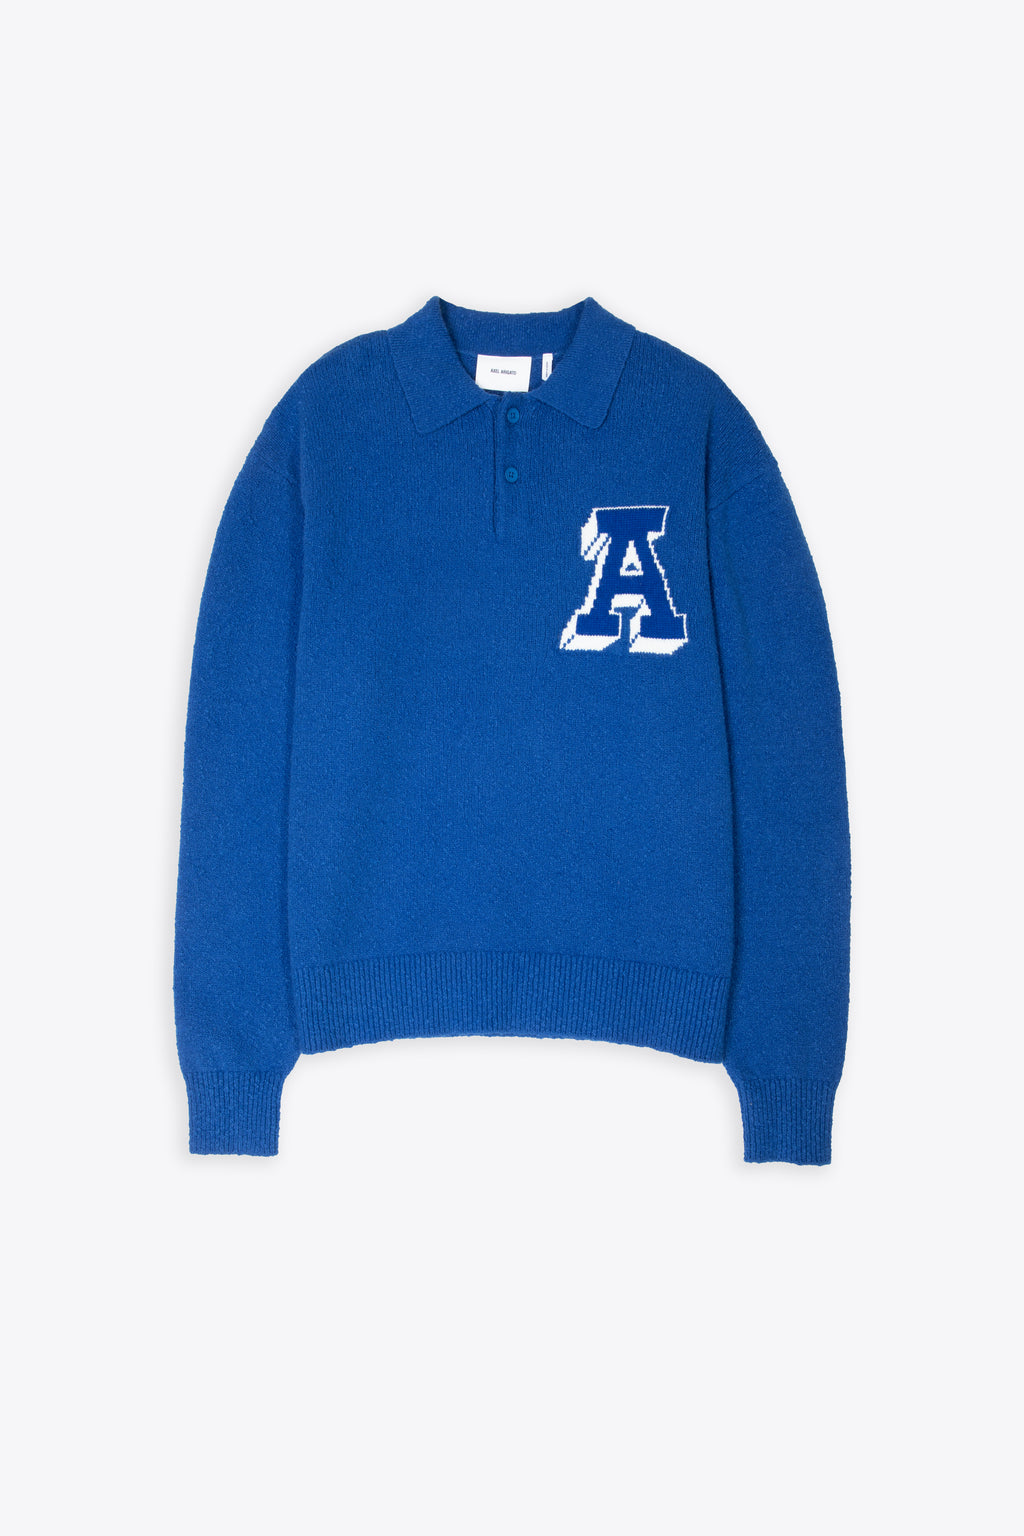 alt-image__Royal-blue-cotton-blend-polo-sweater---Team-Polo-Sweater